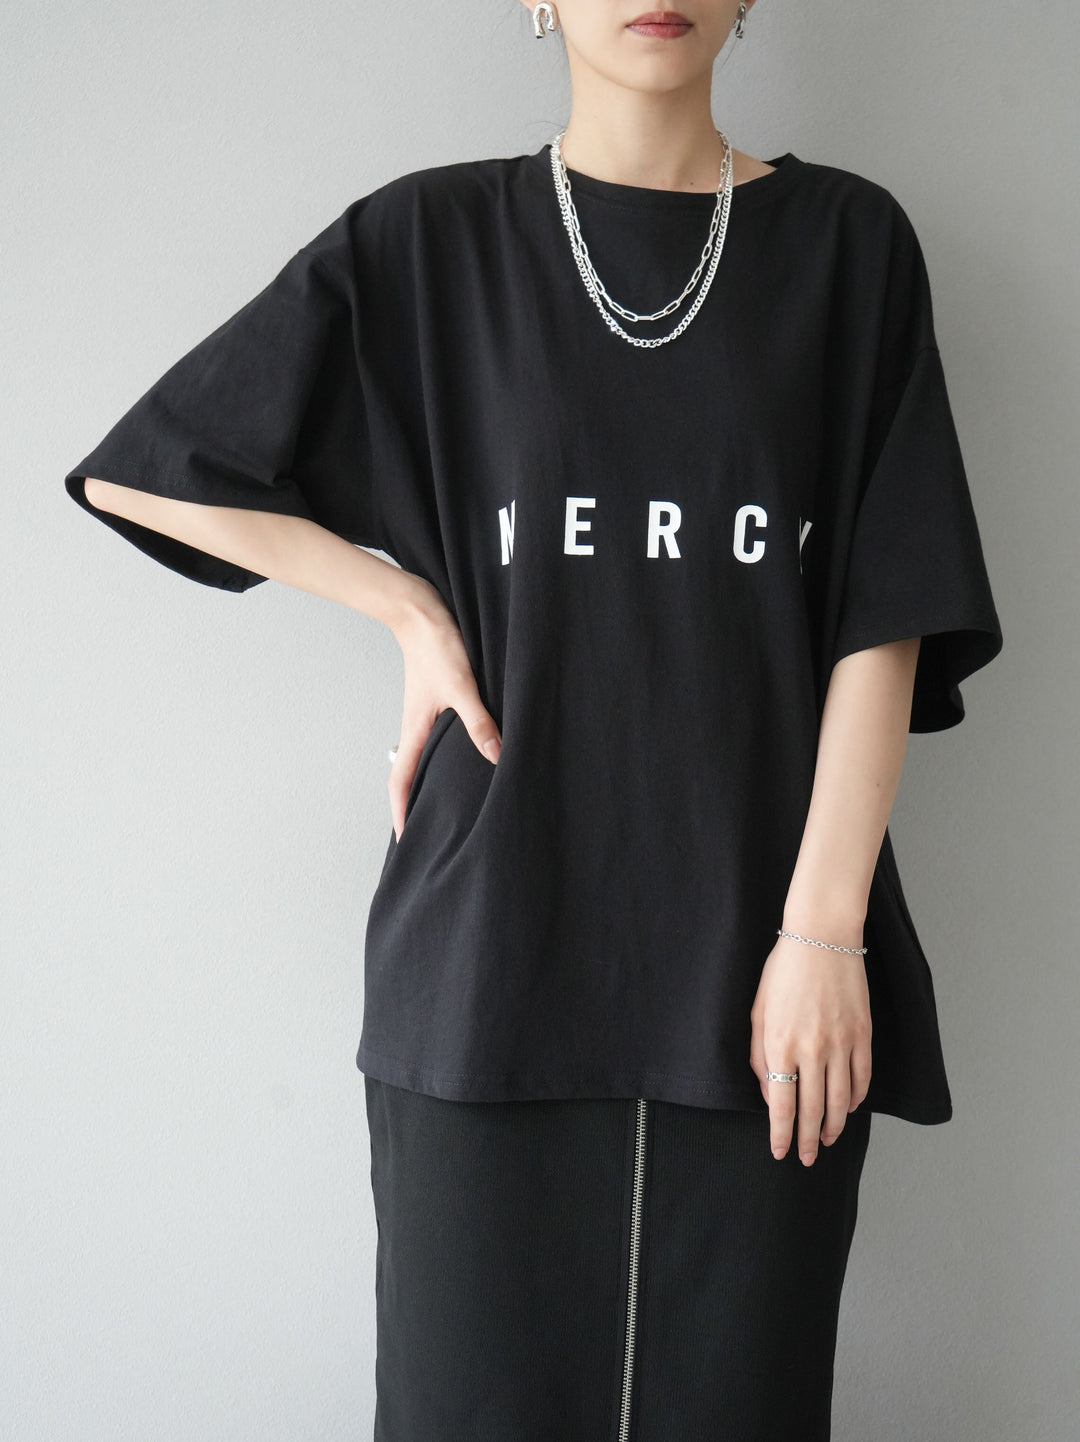 [Pre-order] 'MERCY' printed big T-shirt/Black